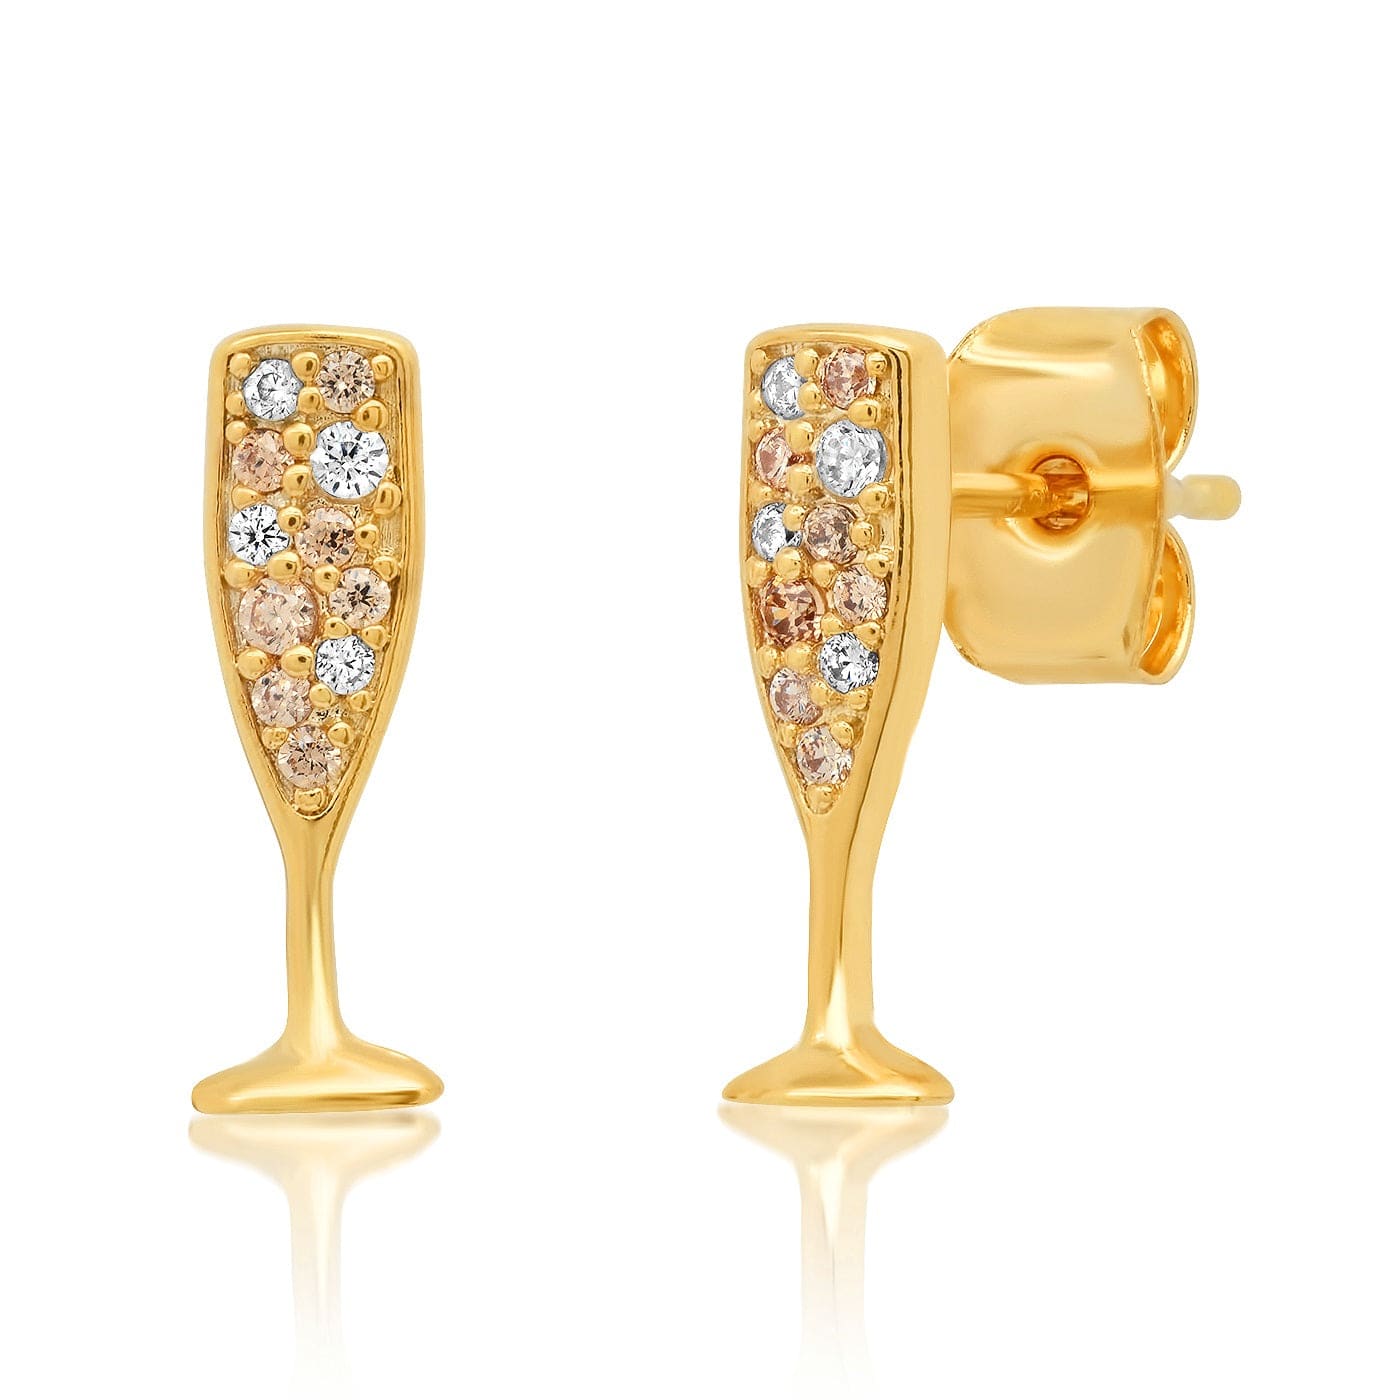 TAI JEWELRY Earrings Champagne Glass Studs